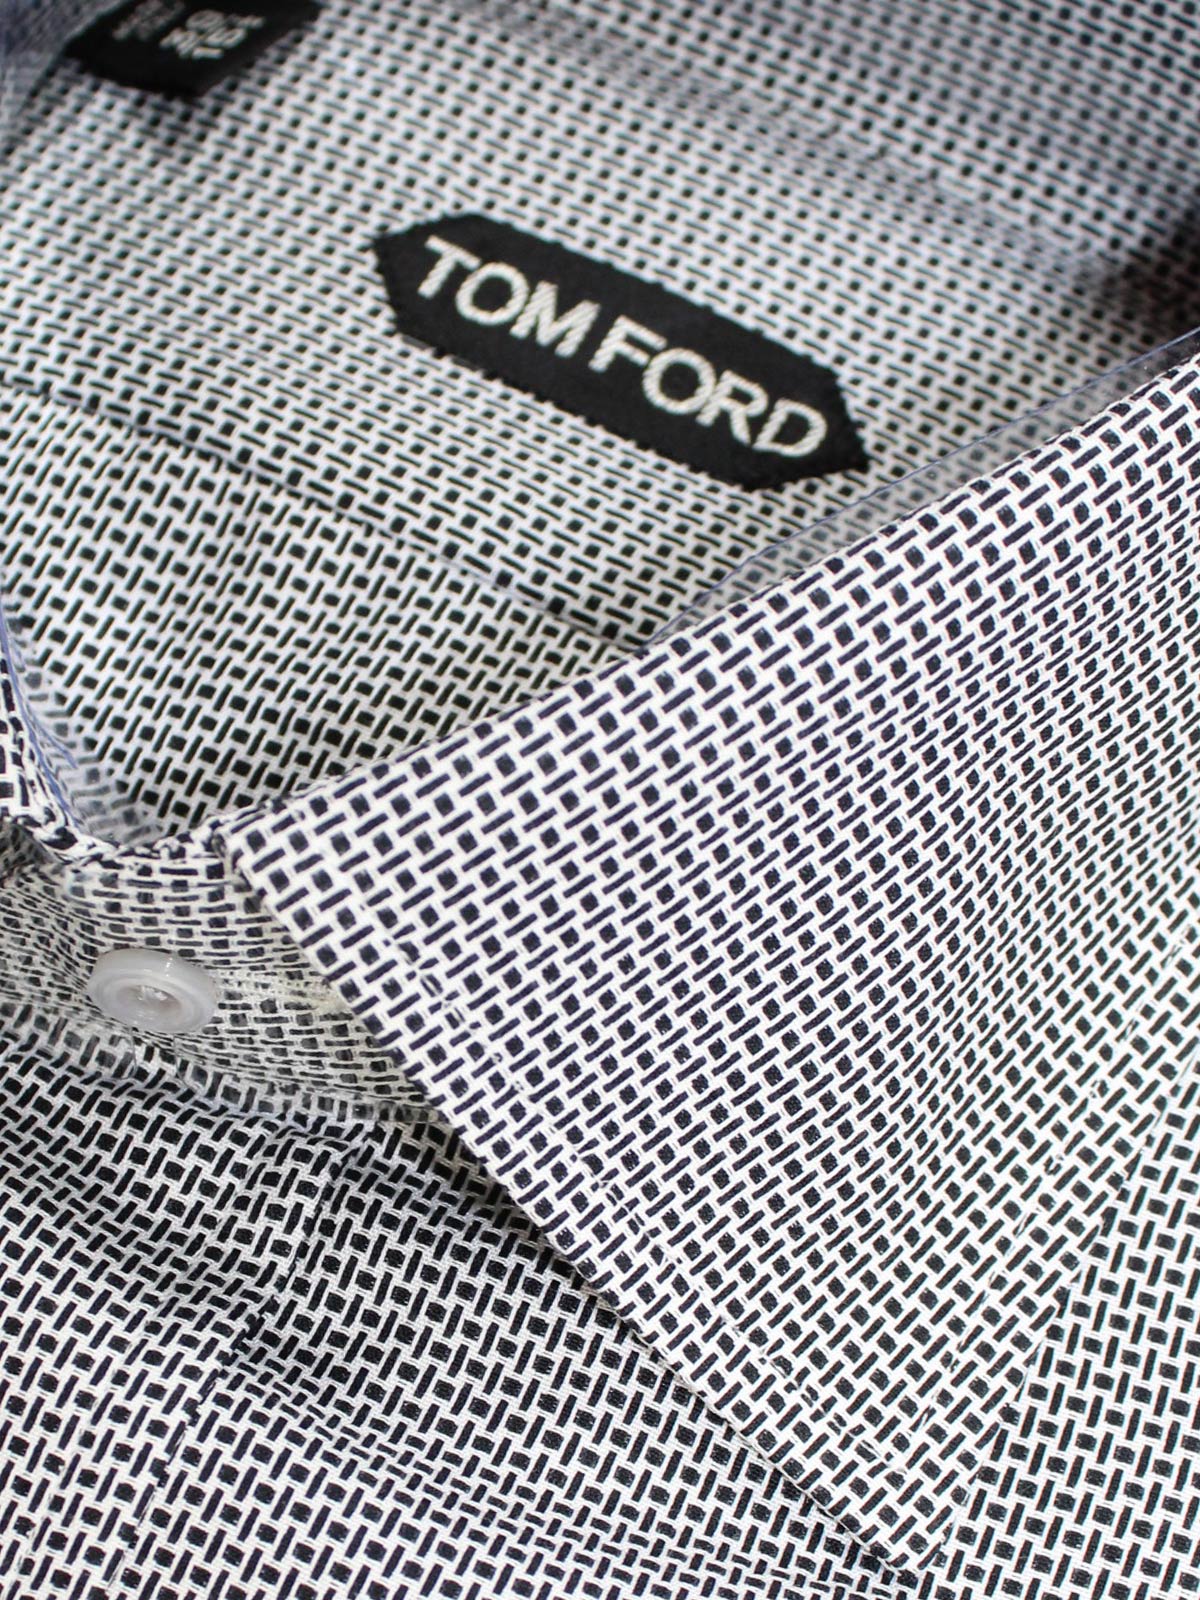 Tom Ford Dress Shirt White Black 